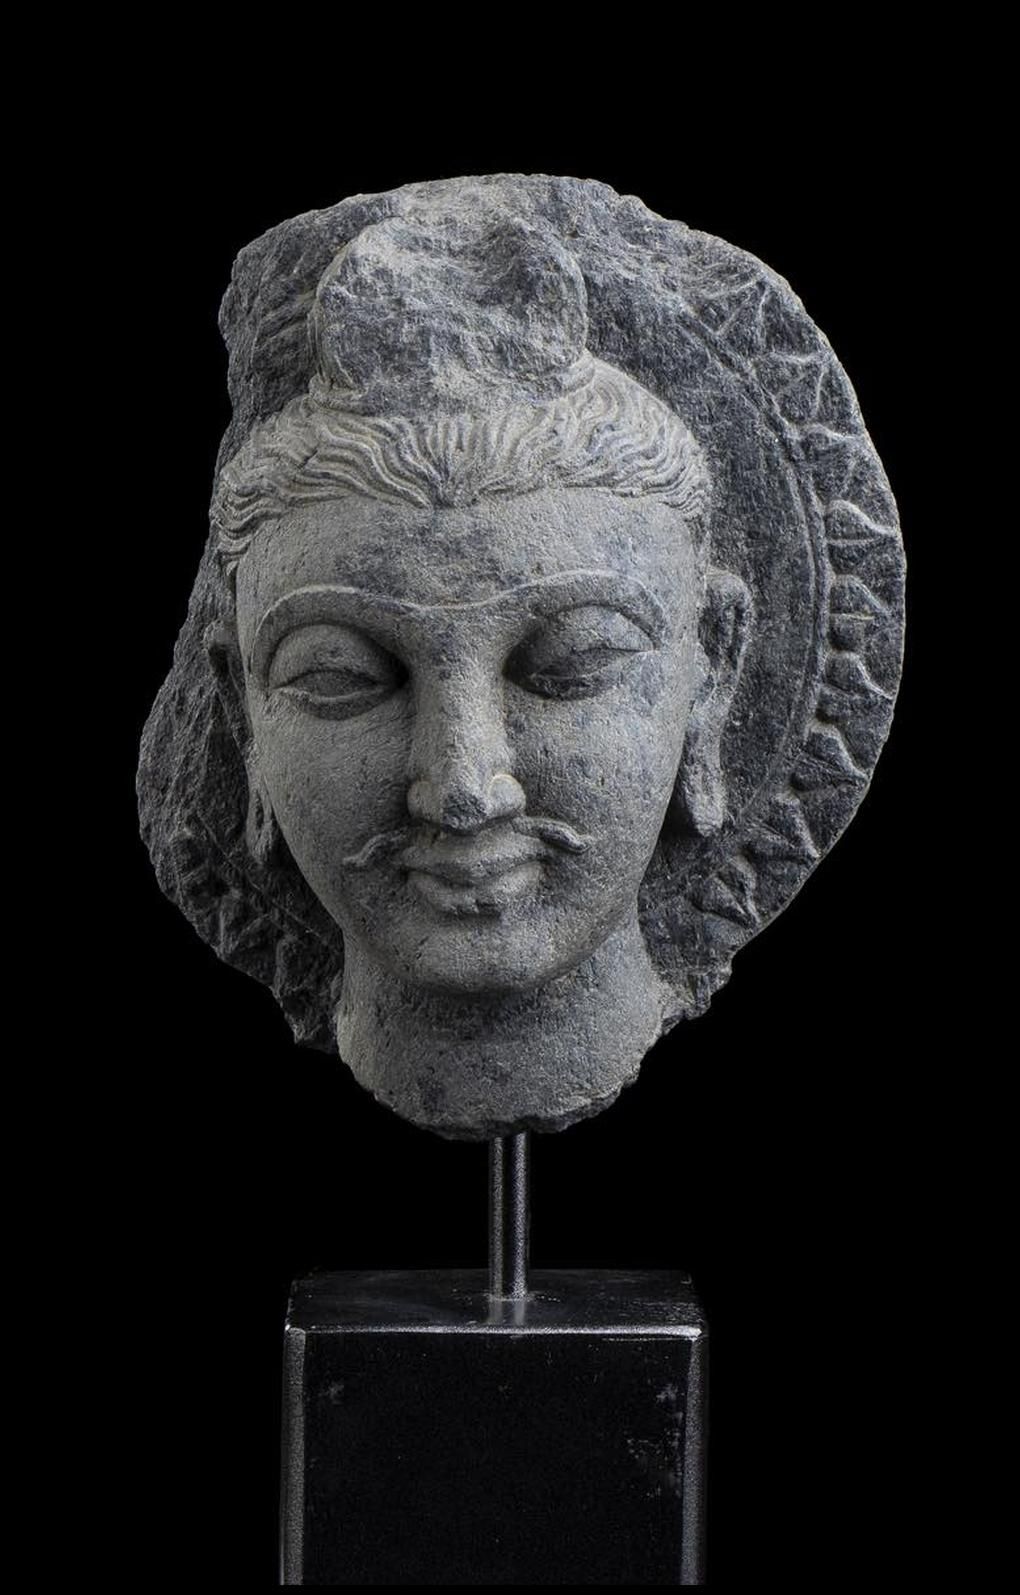 A STONE BUDDHA HEAD 石雕菩萨头像 
犍陀罗风格

18 x 14厘米

出处：意大利私人收藏。